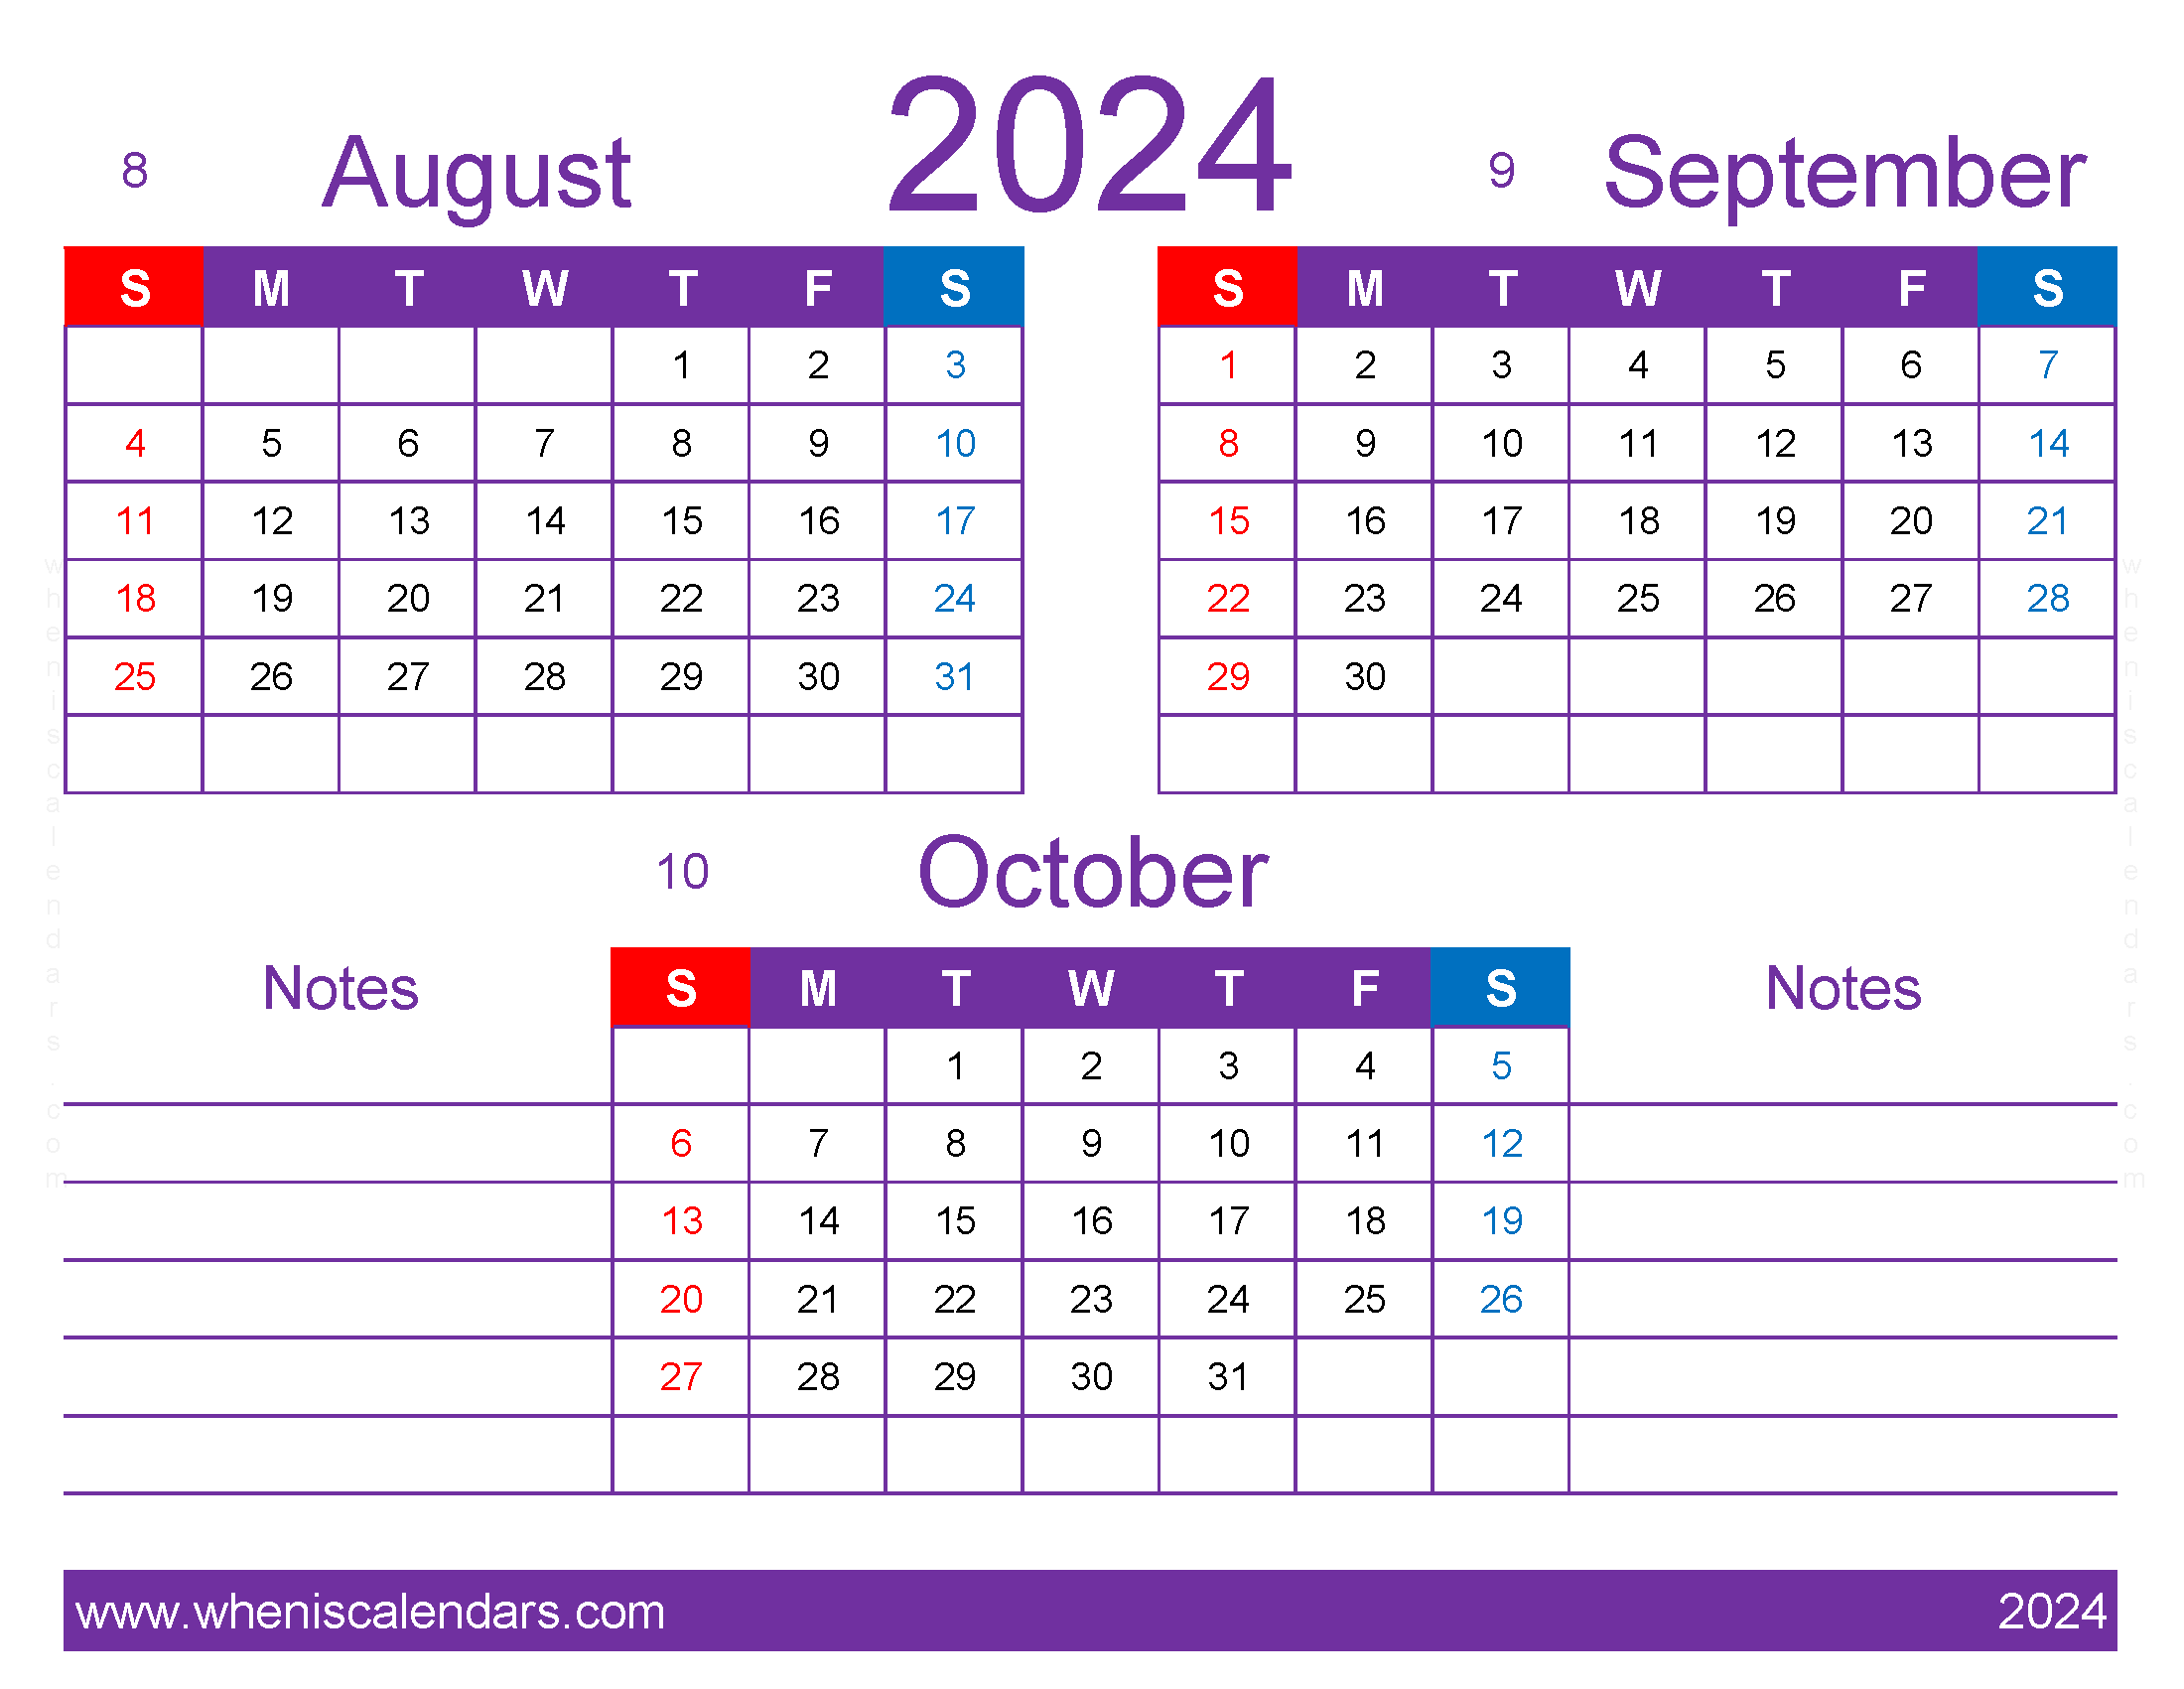 Download 2024 Aug Sept Oct Calendar ASO433